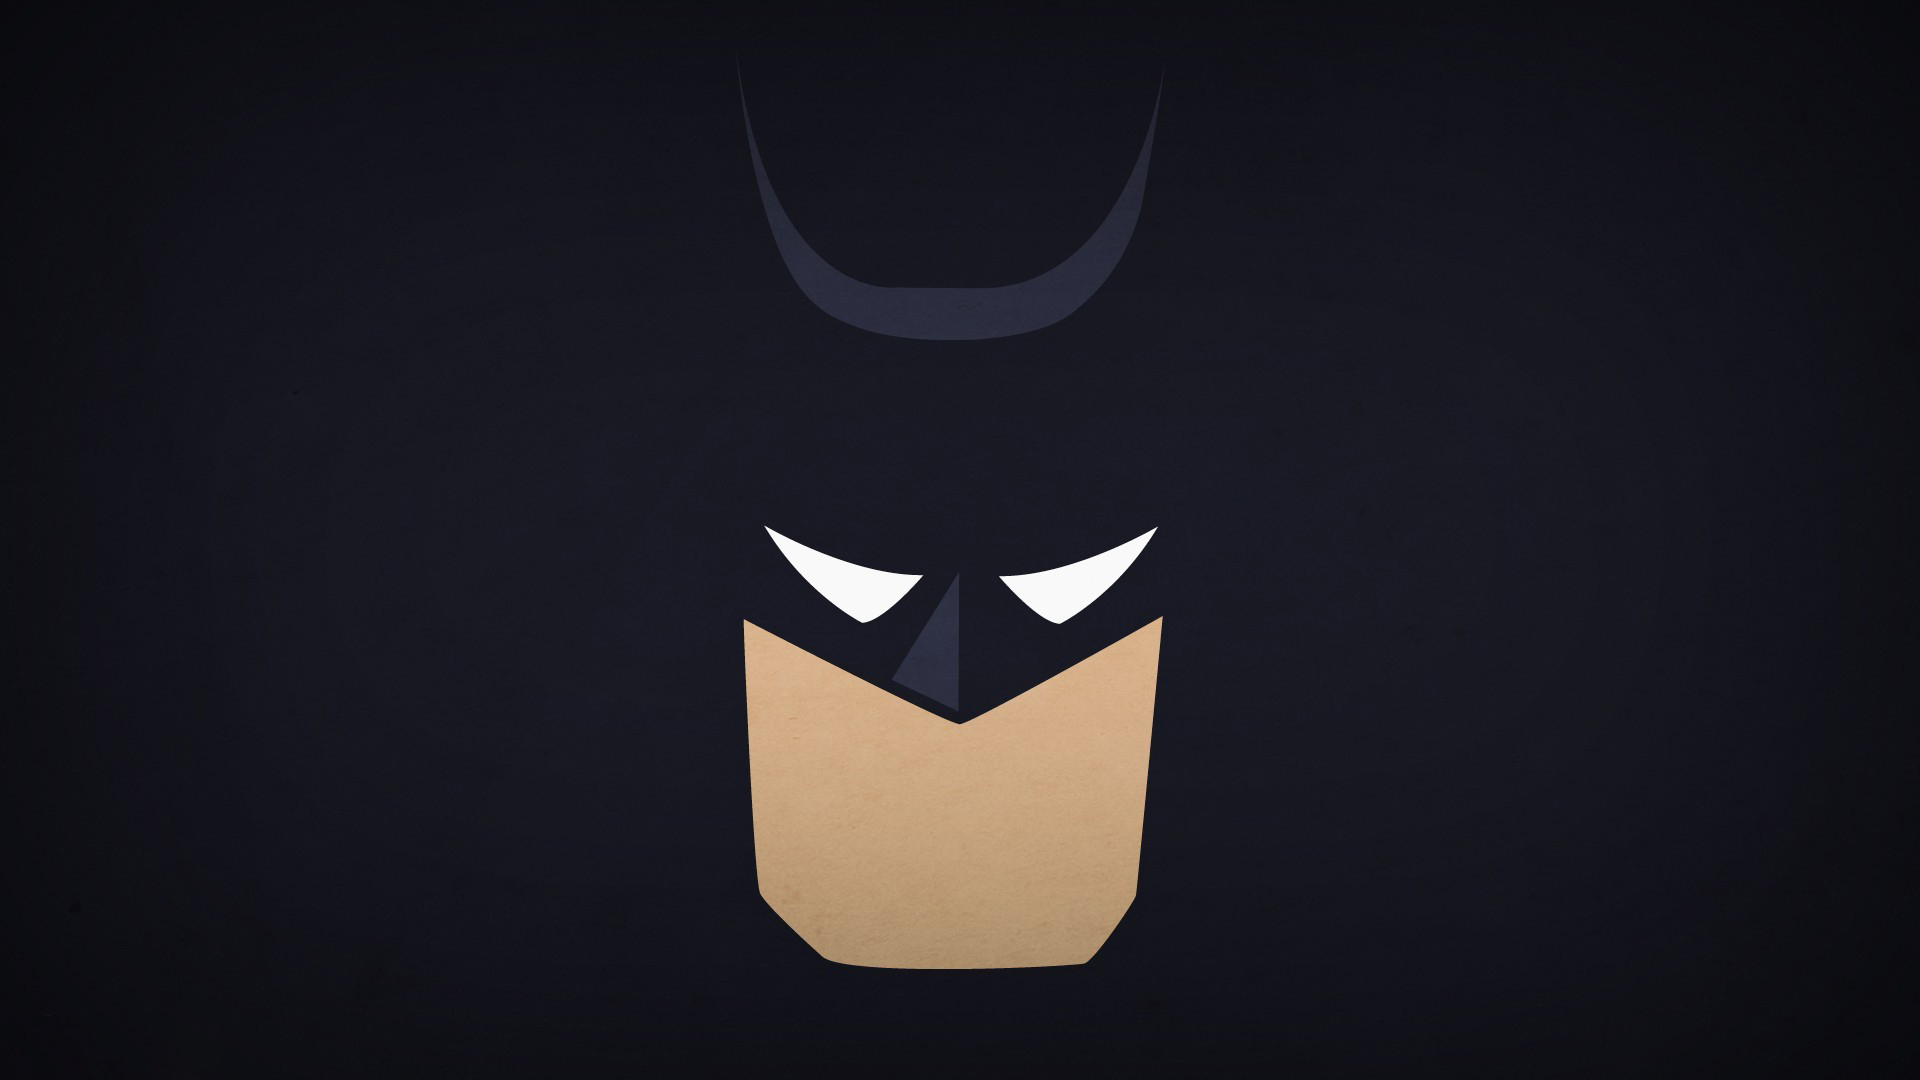 Free download wallpapers batman desktop cartoon 1920x1080 [1920x1080] for  your Desktop, Mobile & Tablet | Explore 75+ Batman Cartoon Wallpaper |  Batman Wallpaper, Wallpaper Batman, Batman Wallpapers